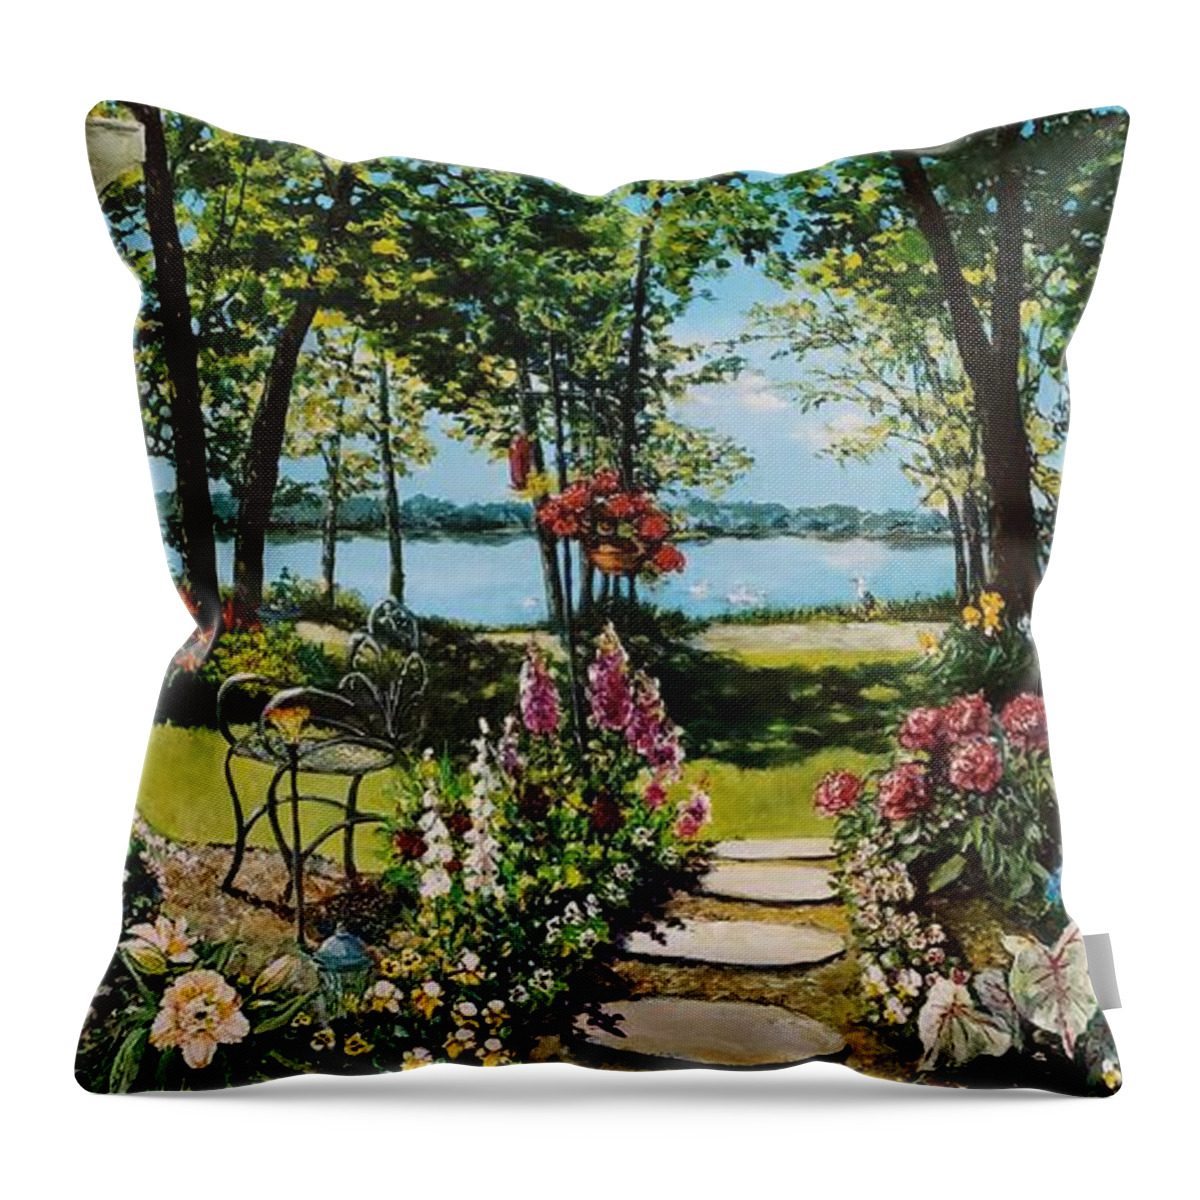 Garden Throw Pillow featuring the painting Fran's Garden by Merana Cadorette